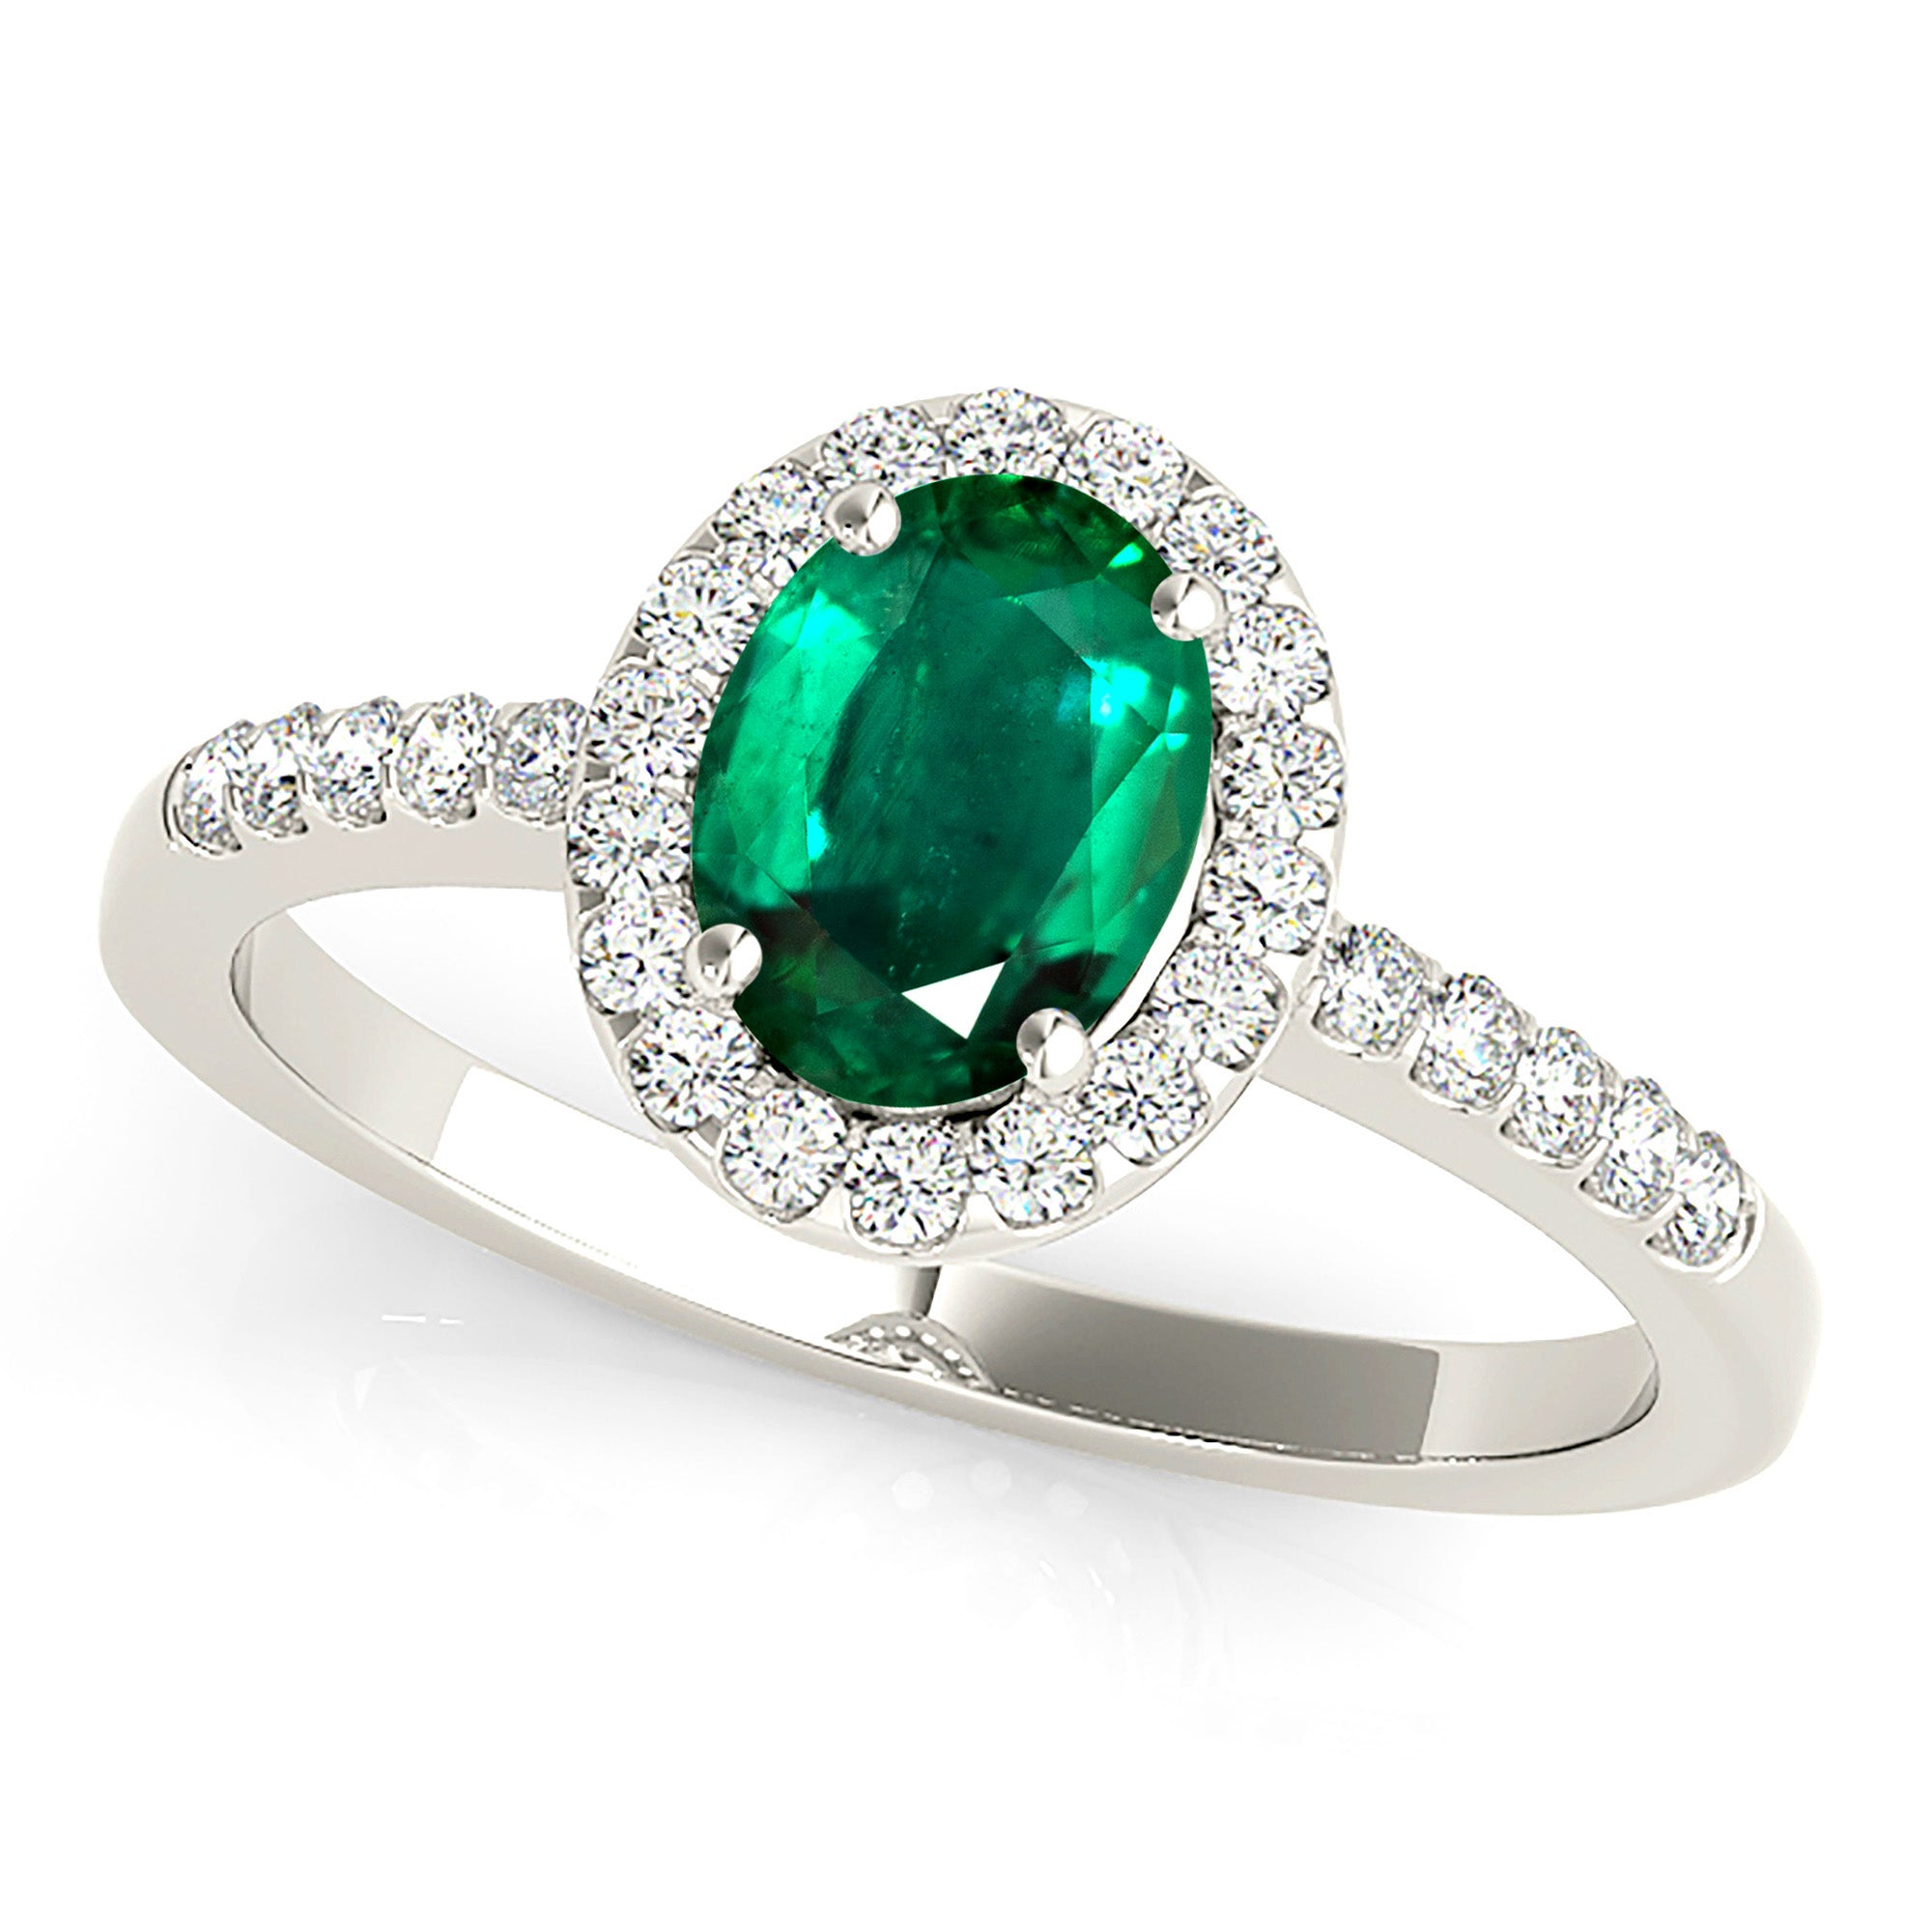 1.30 ct. Genuine Oval Emerald With 0.25 ctw. Diamond Halo, Filigree Basket, Thin Diamond Band-in 14K/18K White, Yellow, Rose Gold and Platinum - Christmas Jewelry Gift -VIRABYANI